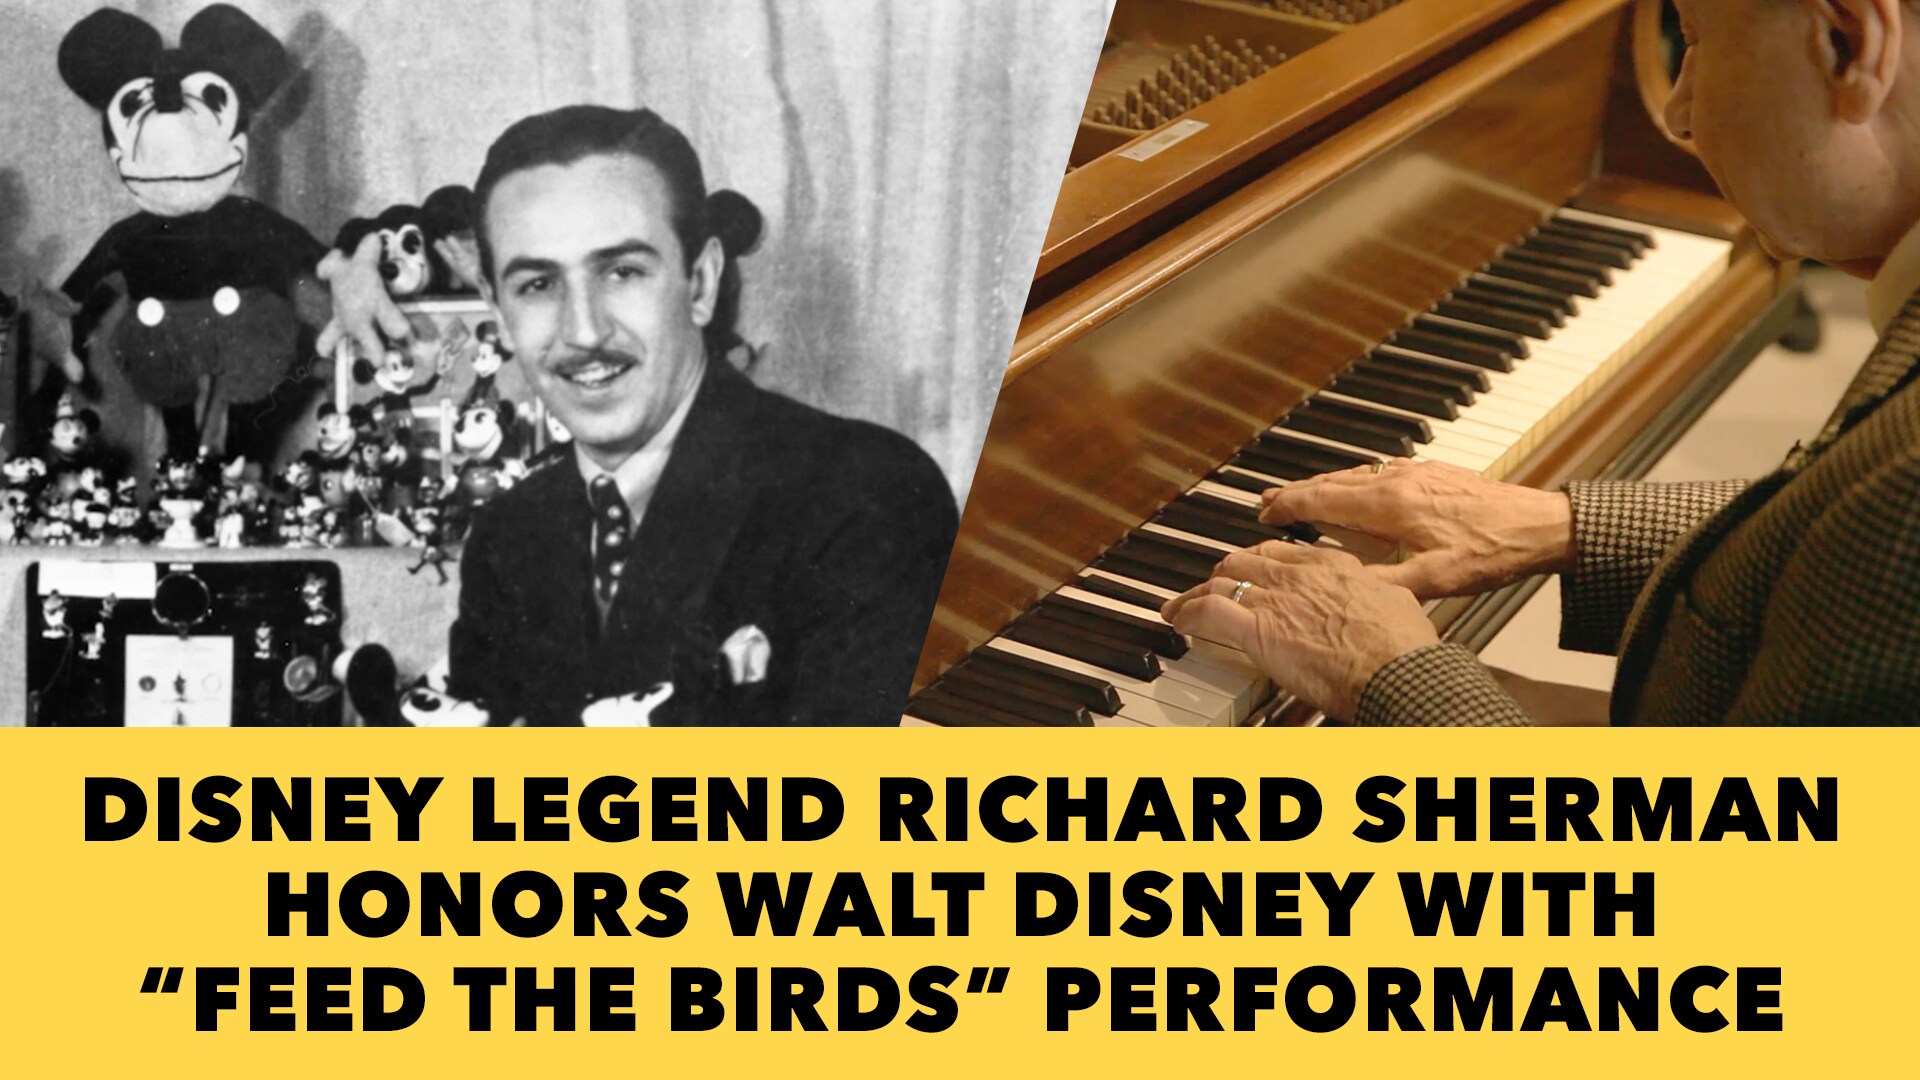 Disney Legend Richard Sherman Honors Walt Disney with “Feed the Birds” Performance